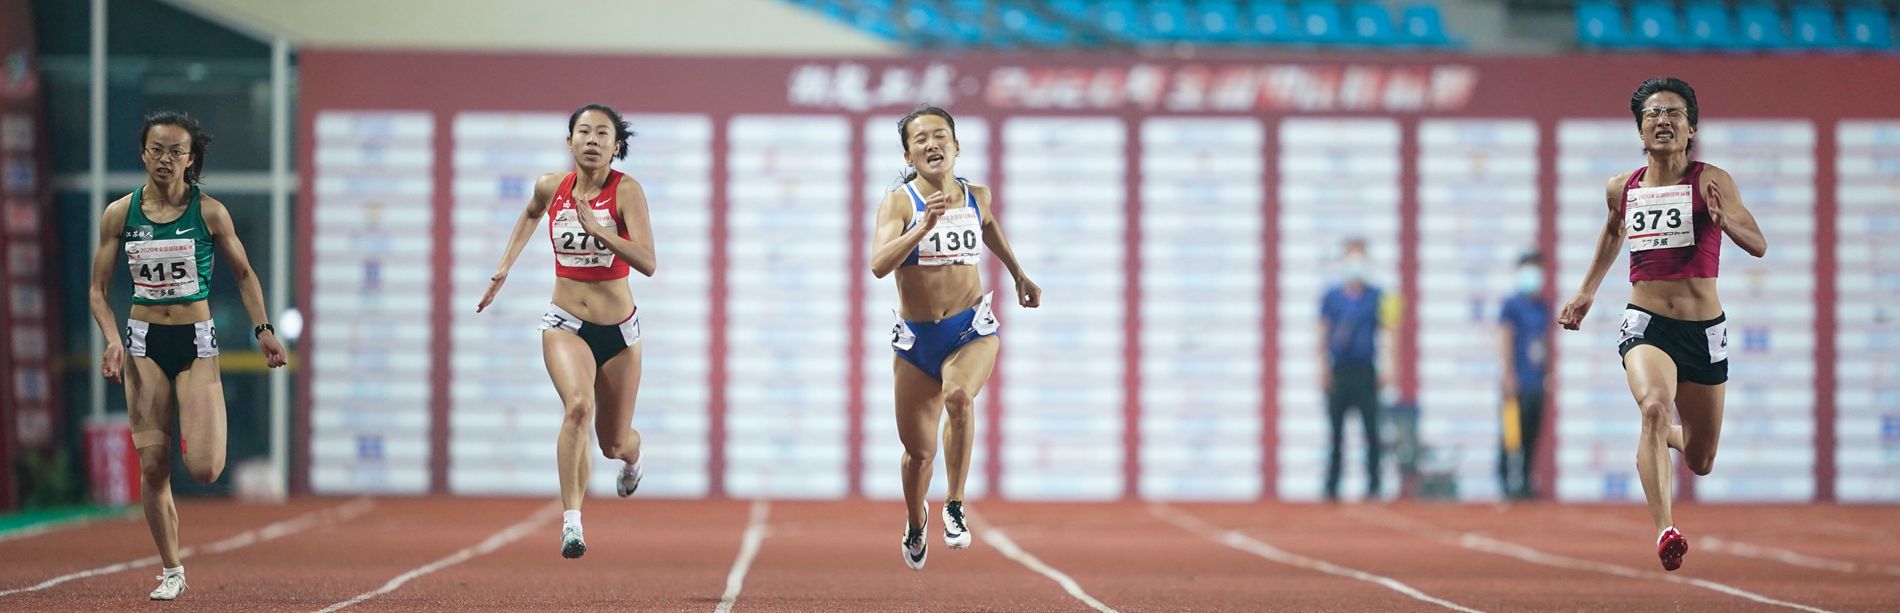 Veterans dominant at 2020 Chinese National Athletics Championships